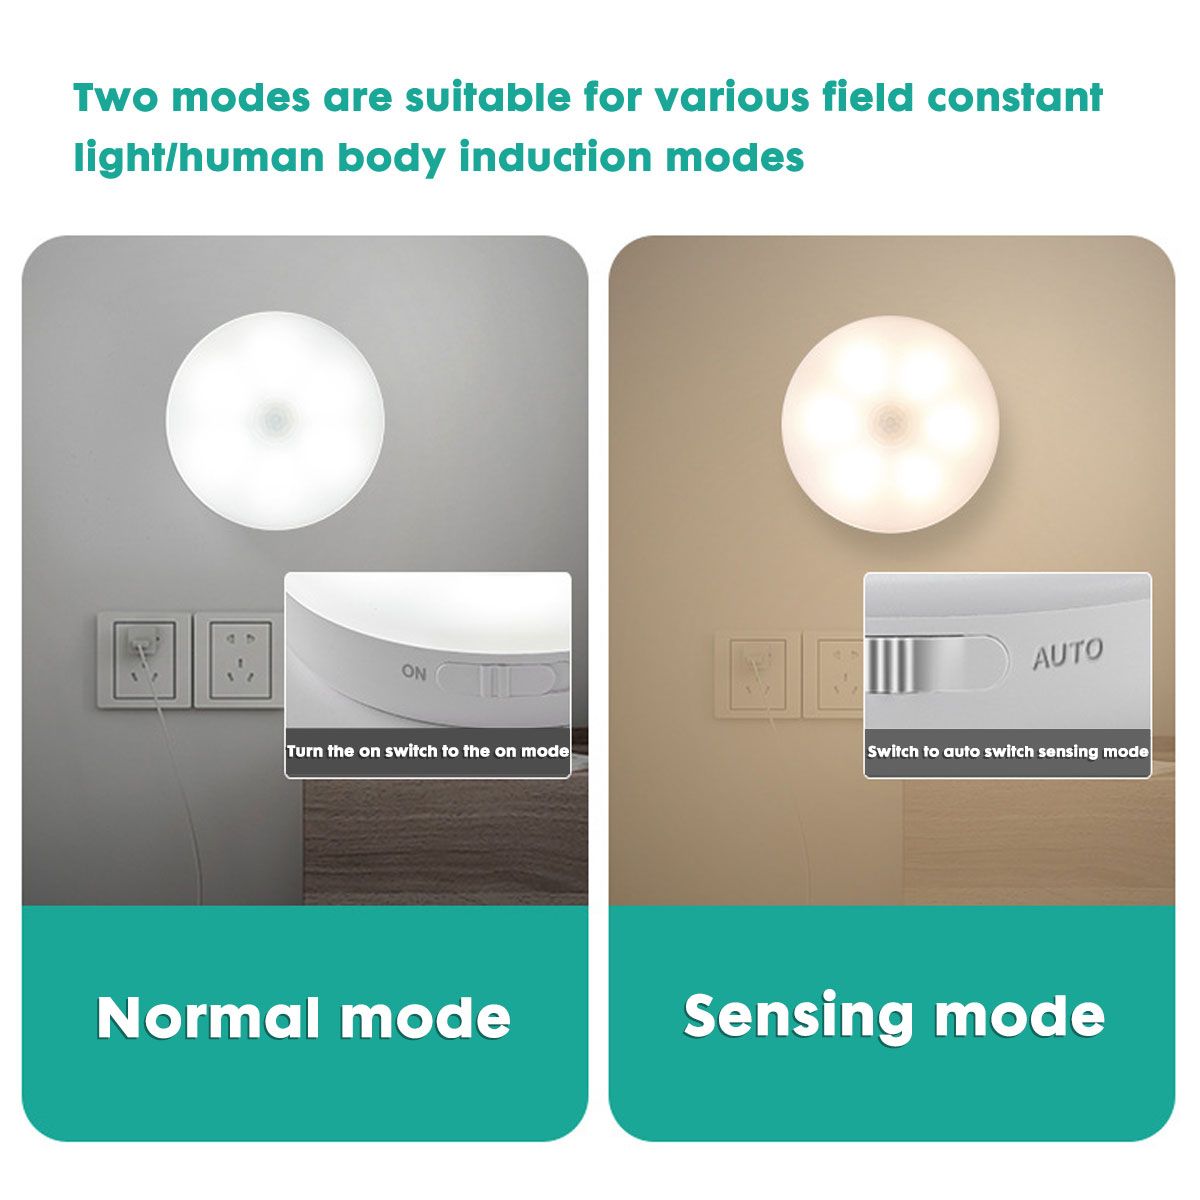 Rechargeable-Cordless-PIR-Motion-Sensor-LED-Night-Light-Lamp-Wardrobe-Bedside-1727569